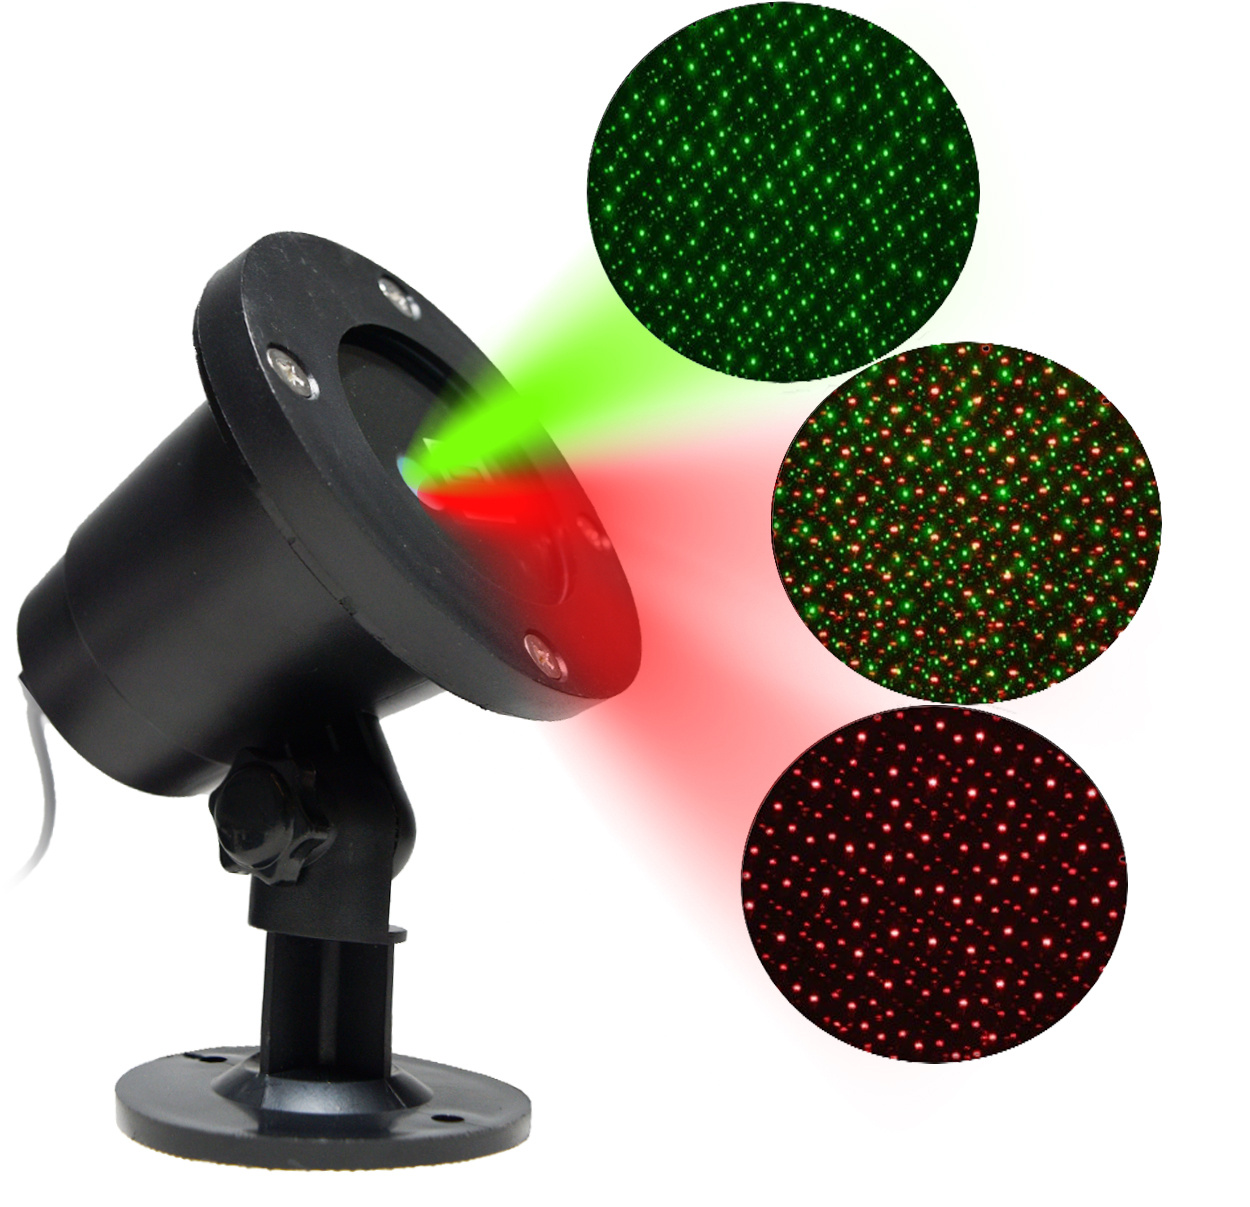 Aga Laser Dekorativer Projektor Grün/Rot MR9090 - Aga24